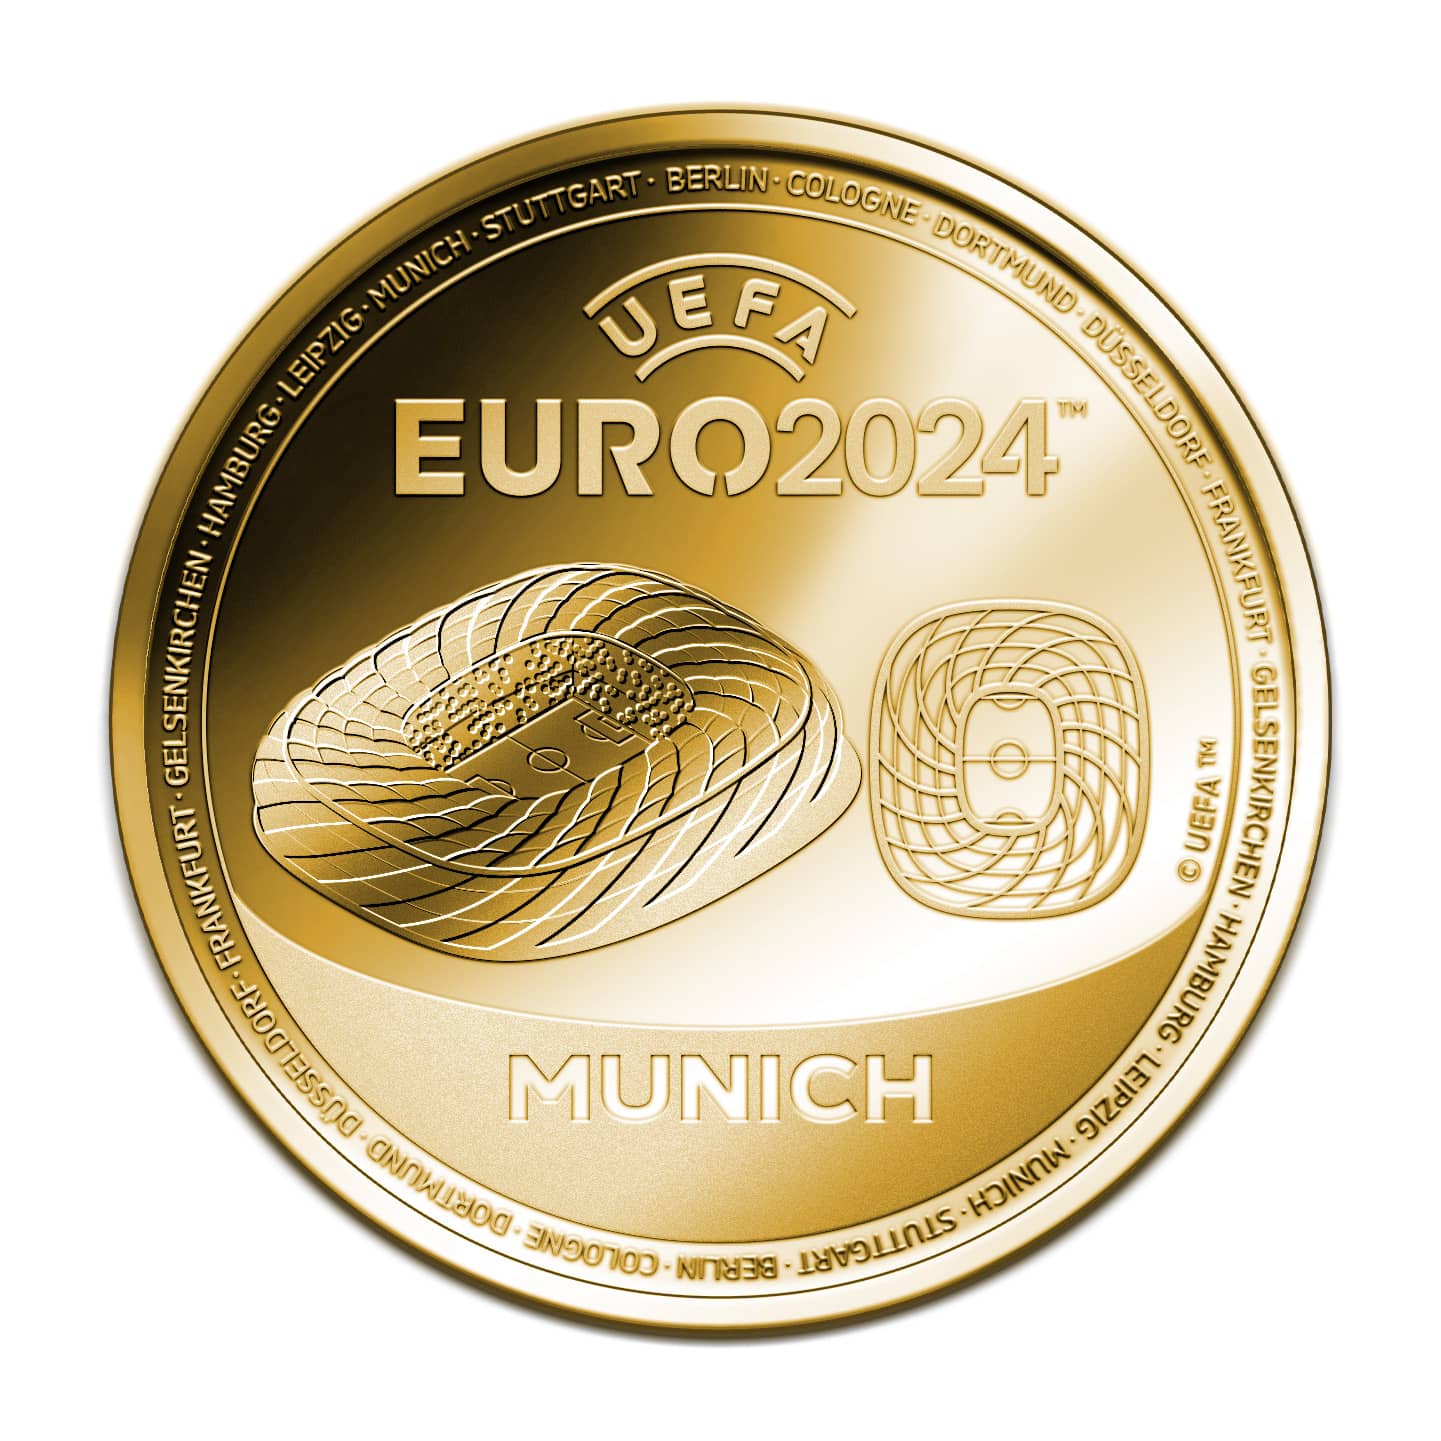 UEFA EURO 2024 München - gold